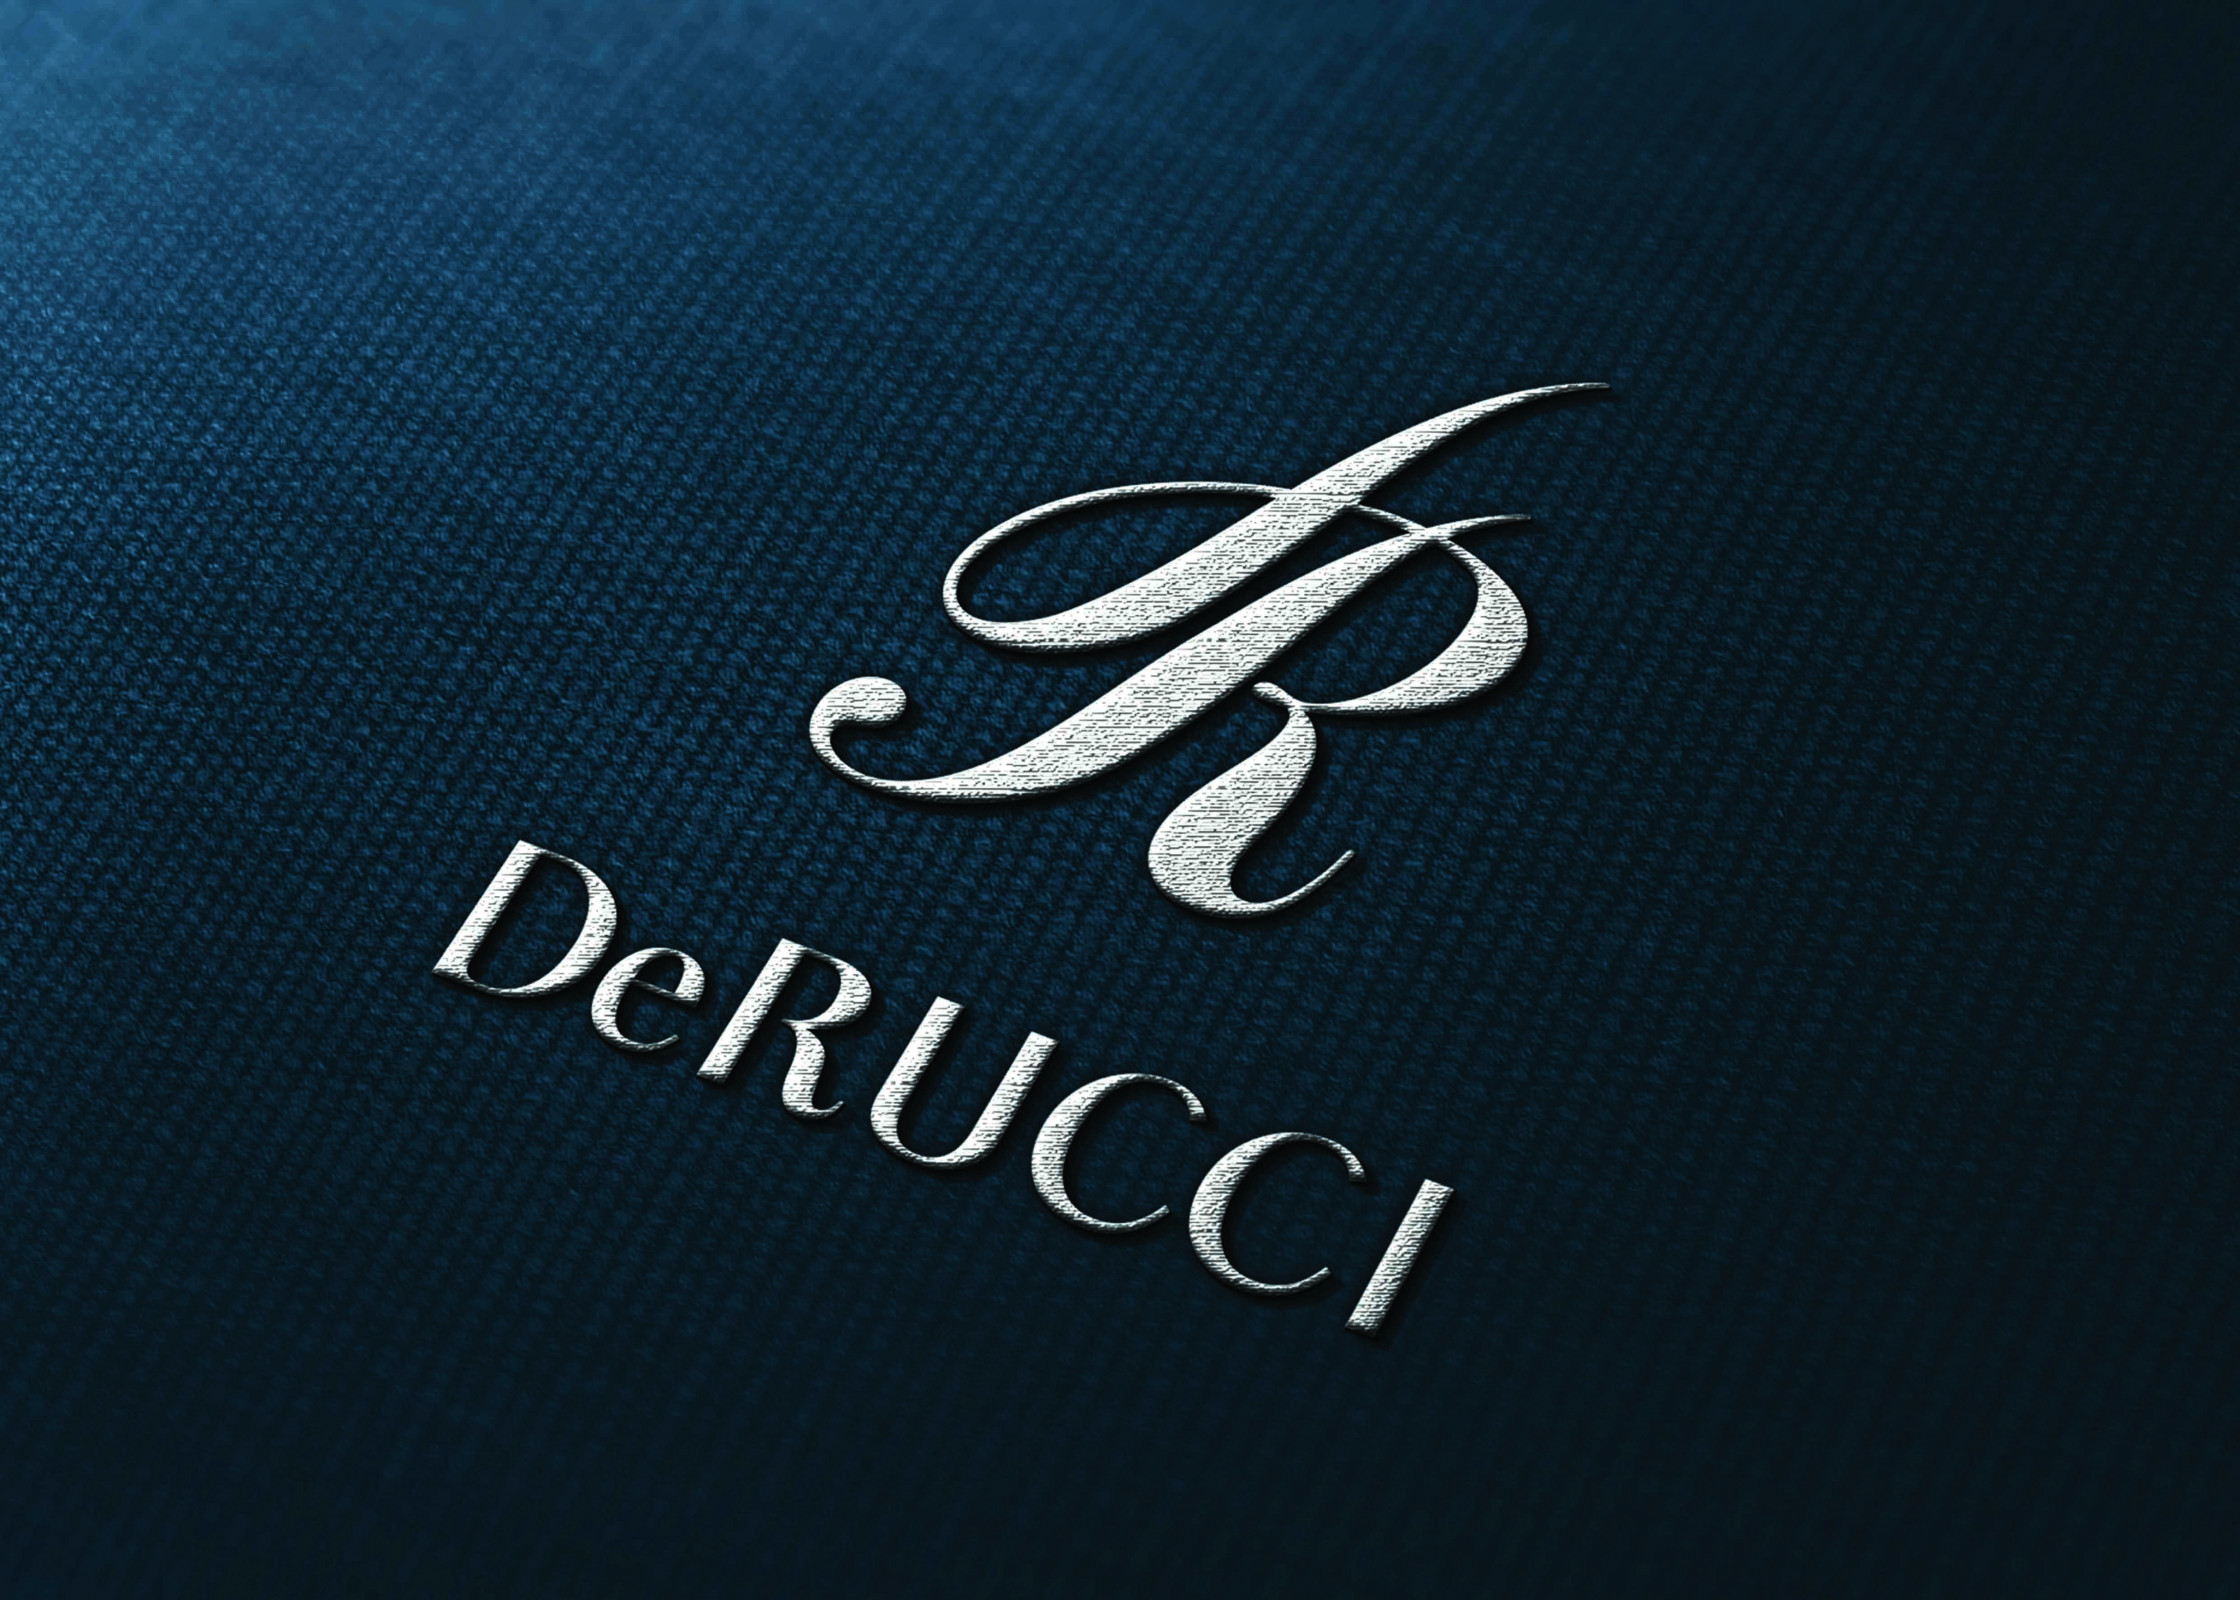 DeRucci